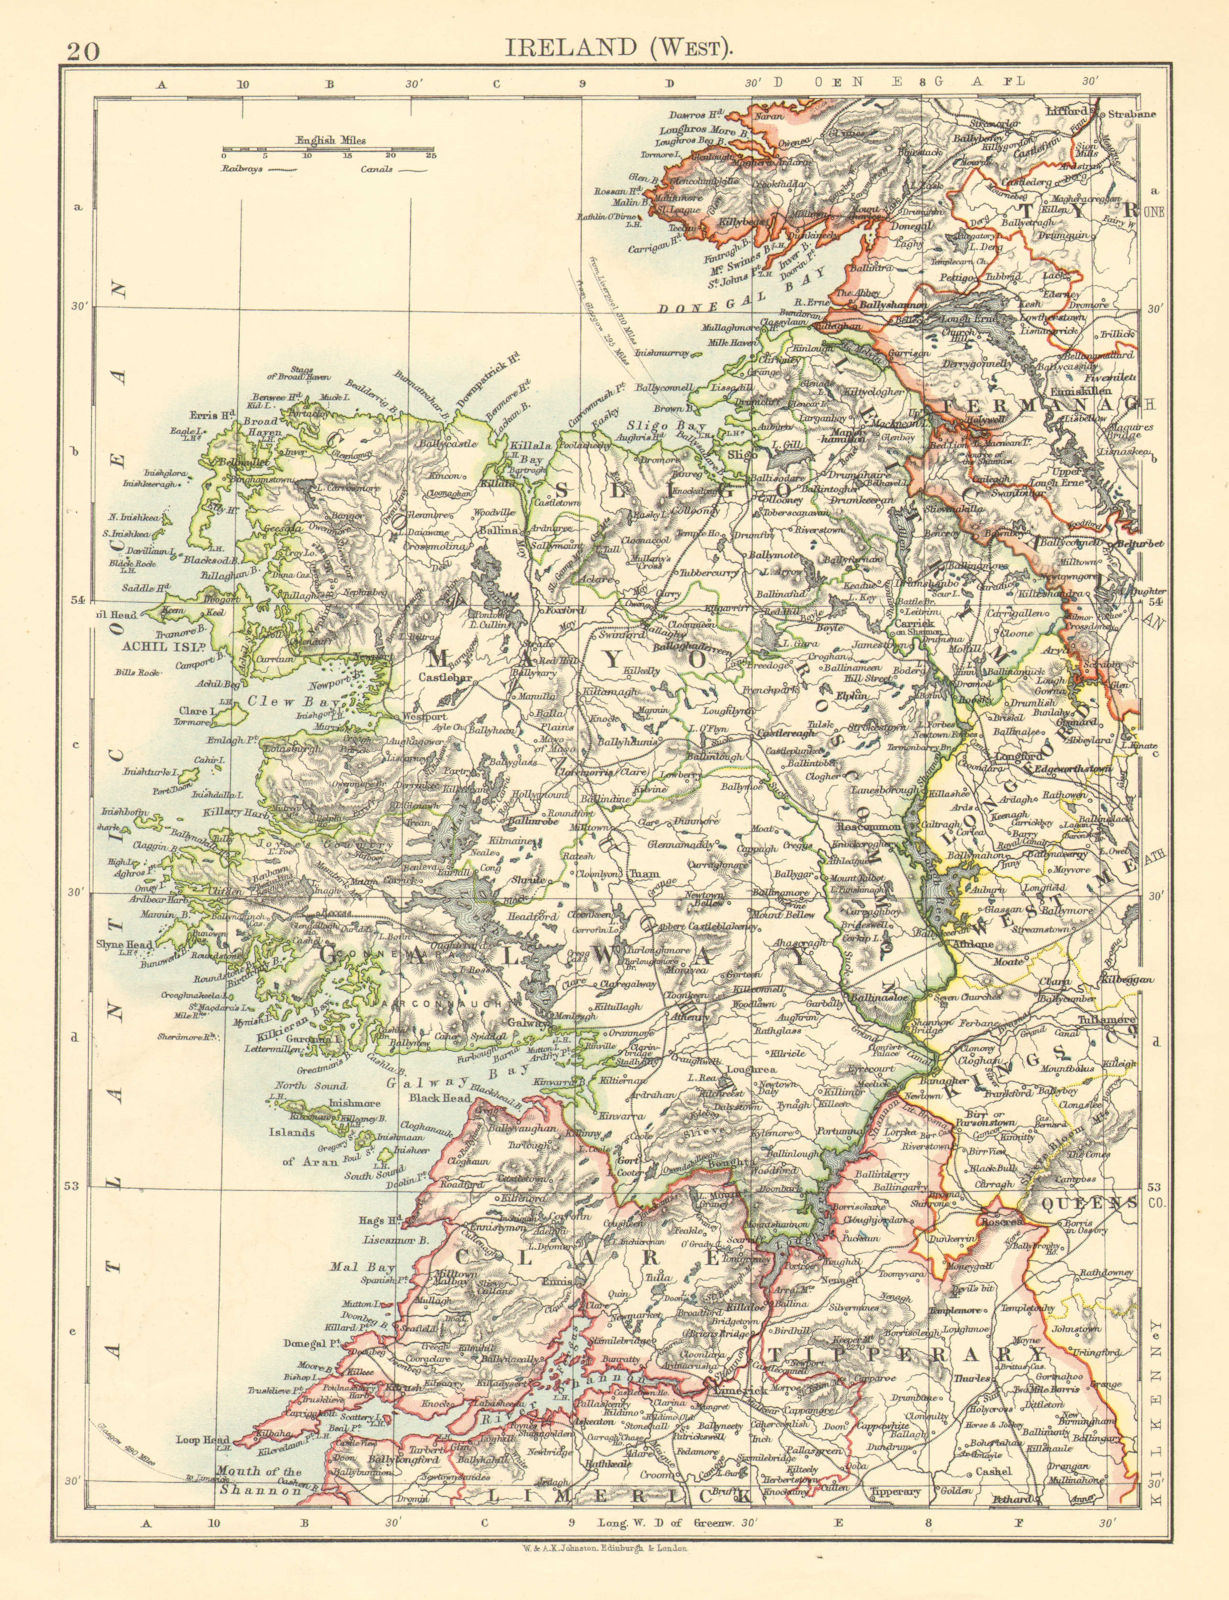 CONNACHT CONNAUGHT. Galway Mayo Sligo Leitrim. West Ireland. JOHNSTON 1899 map